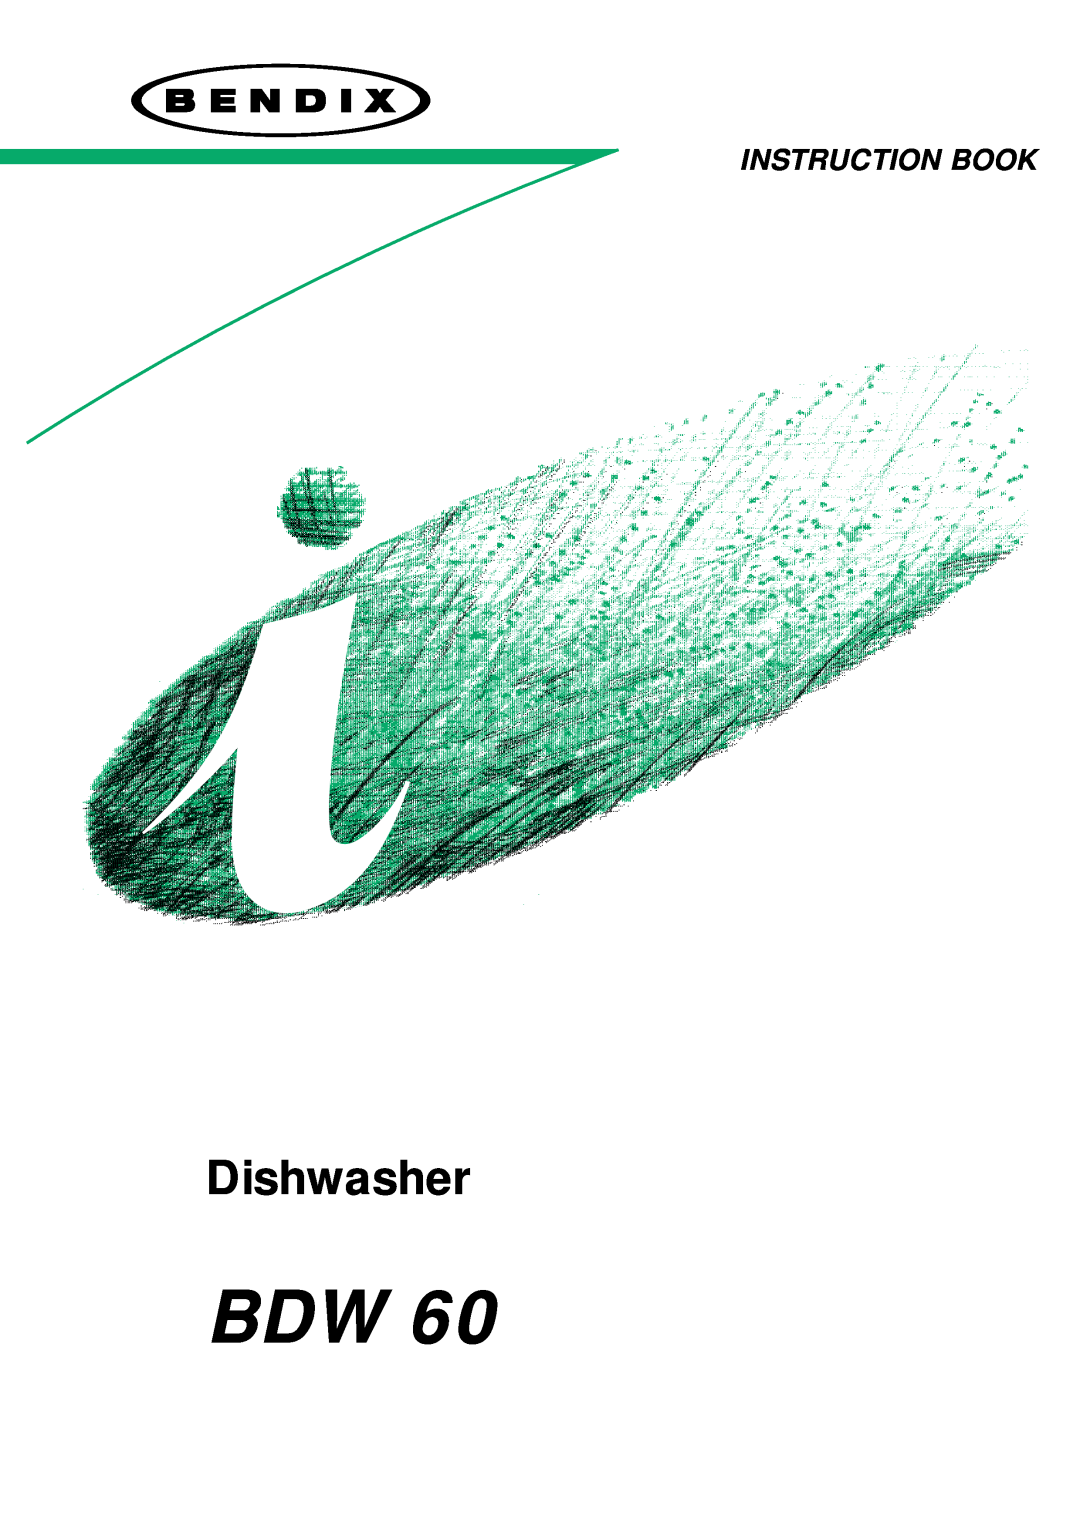 Tricity Bendix BDW 60 manual Dishwasher, Instruction Book 